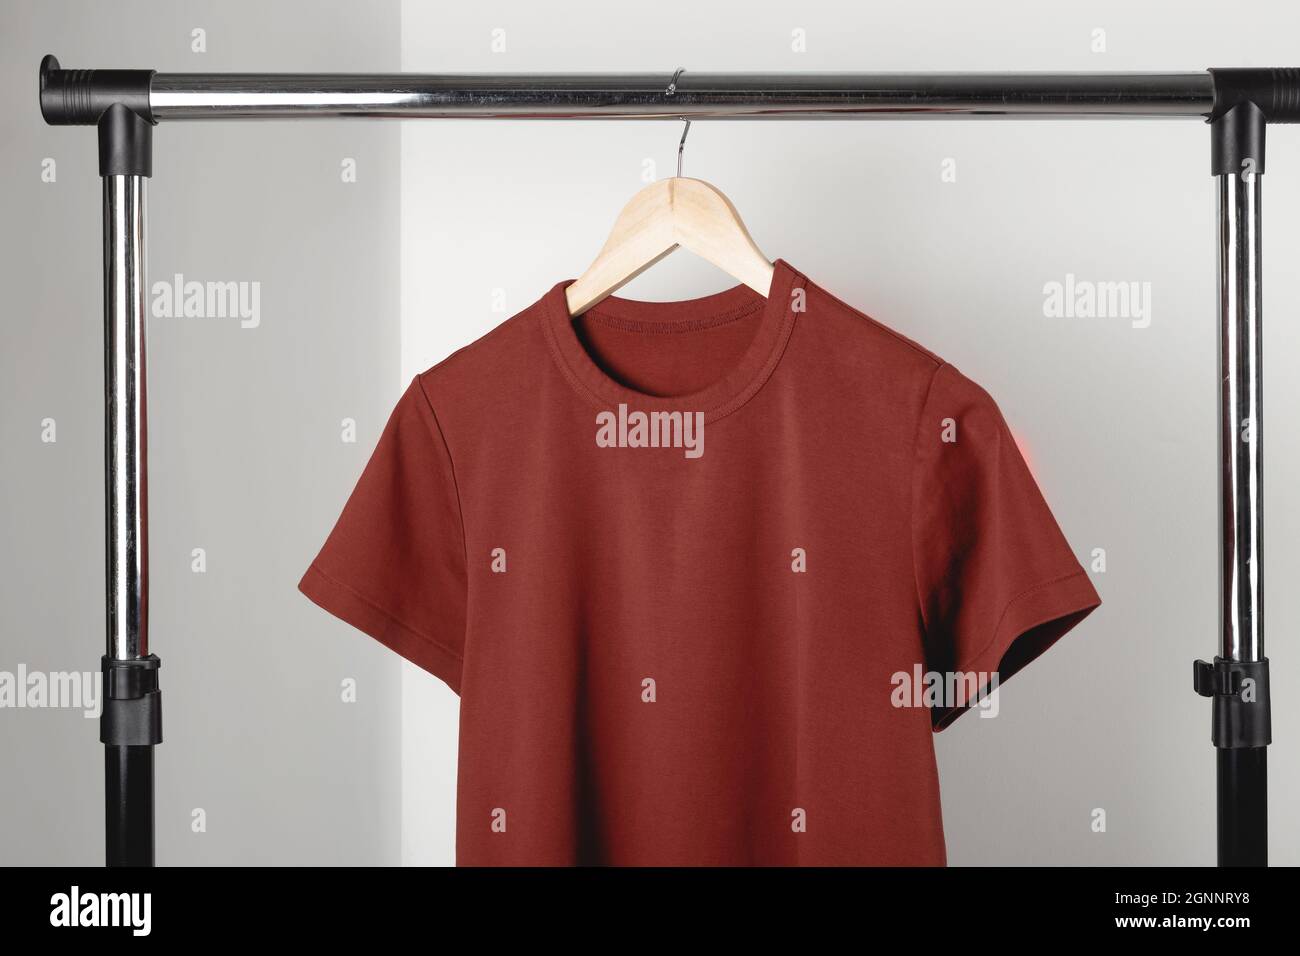 https://c8.alamy.com/comp/2GNNRY8/blank-red-burgundy-t-shirt-mockup-on-clothes-hanger-bella-canvas-mock-up-2GNNRY8.jpg